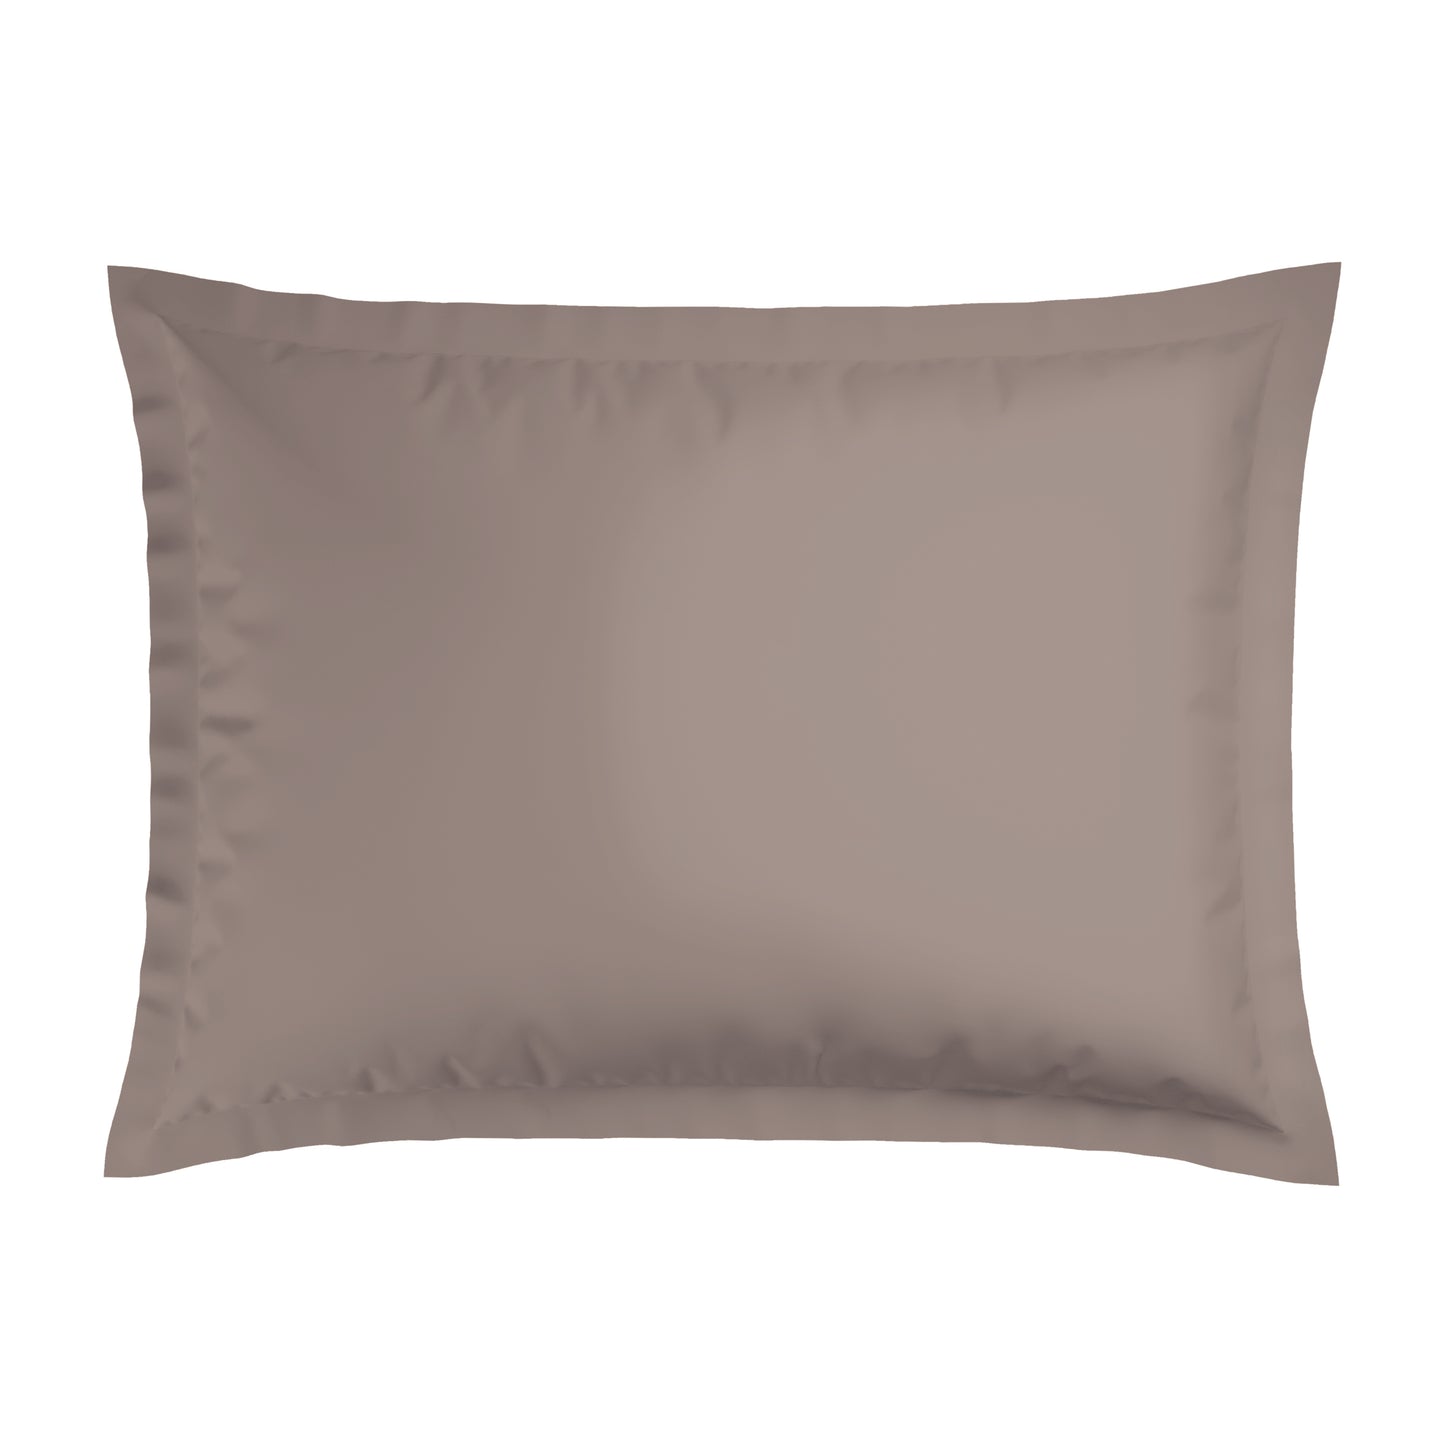 Pillowcase(s) cotton satin - Nice Taupe